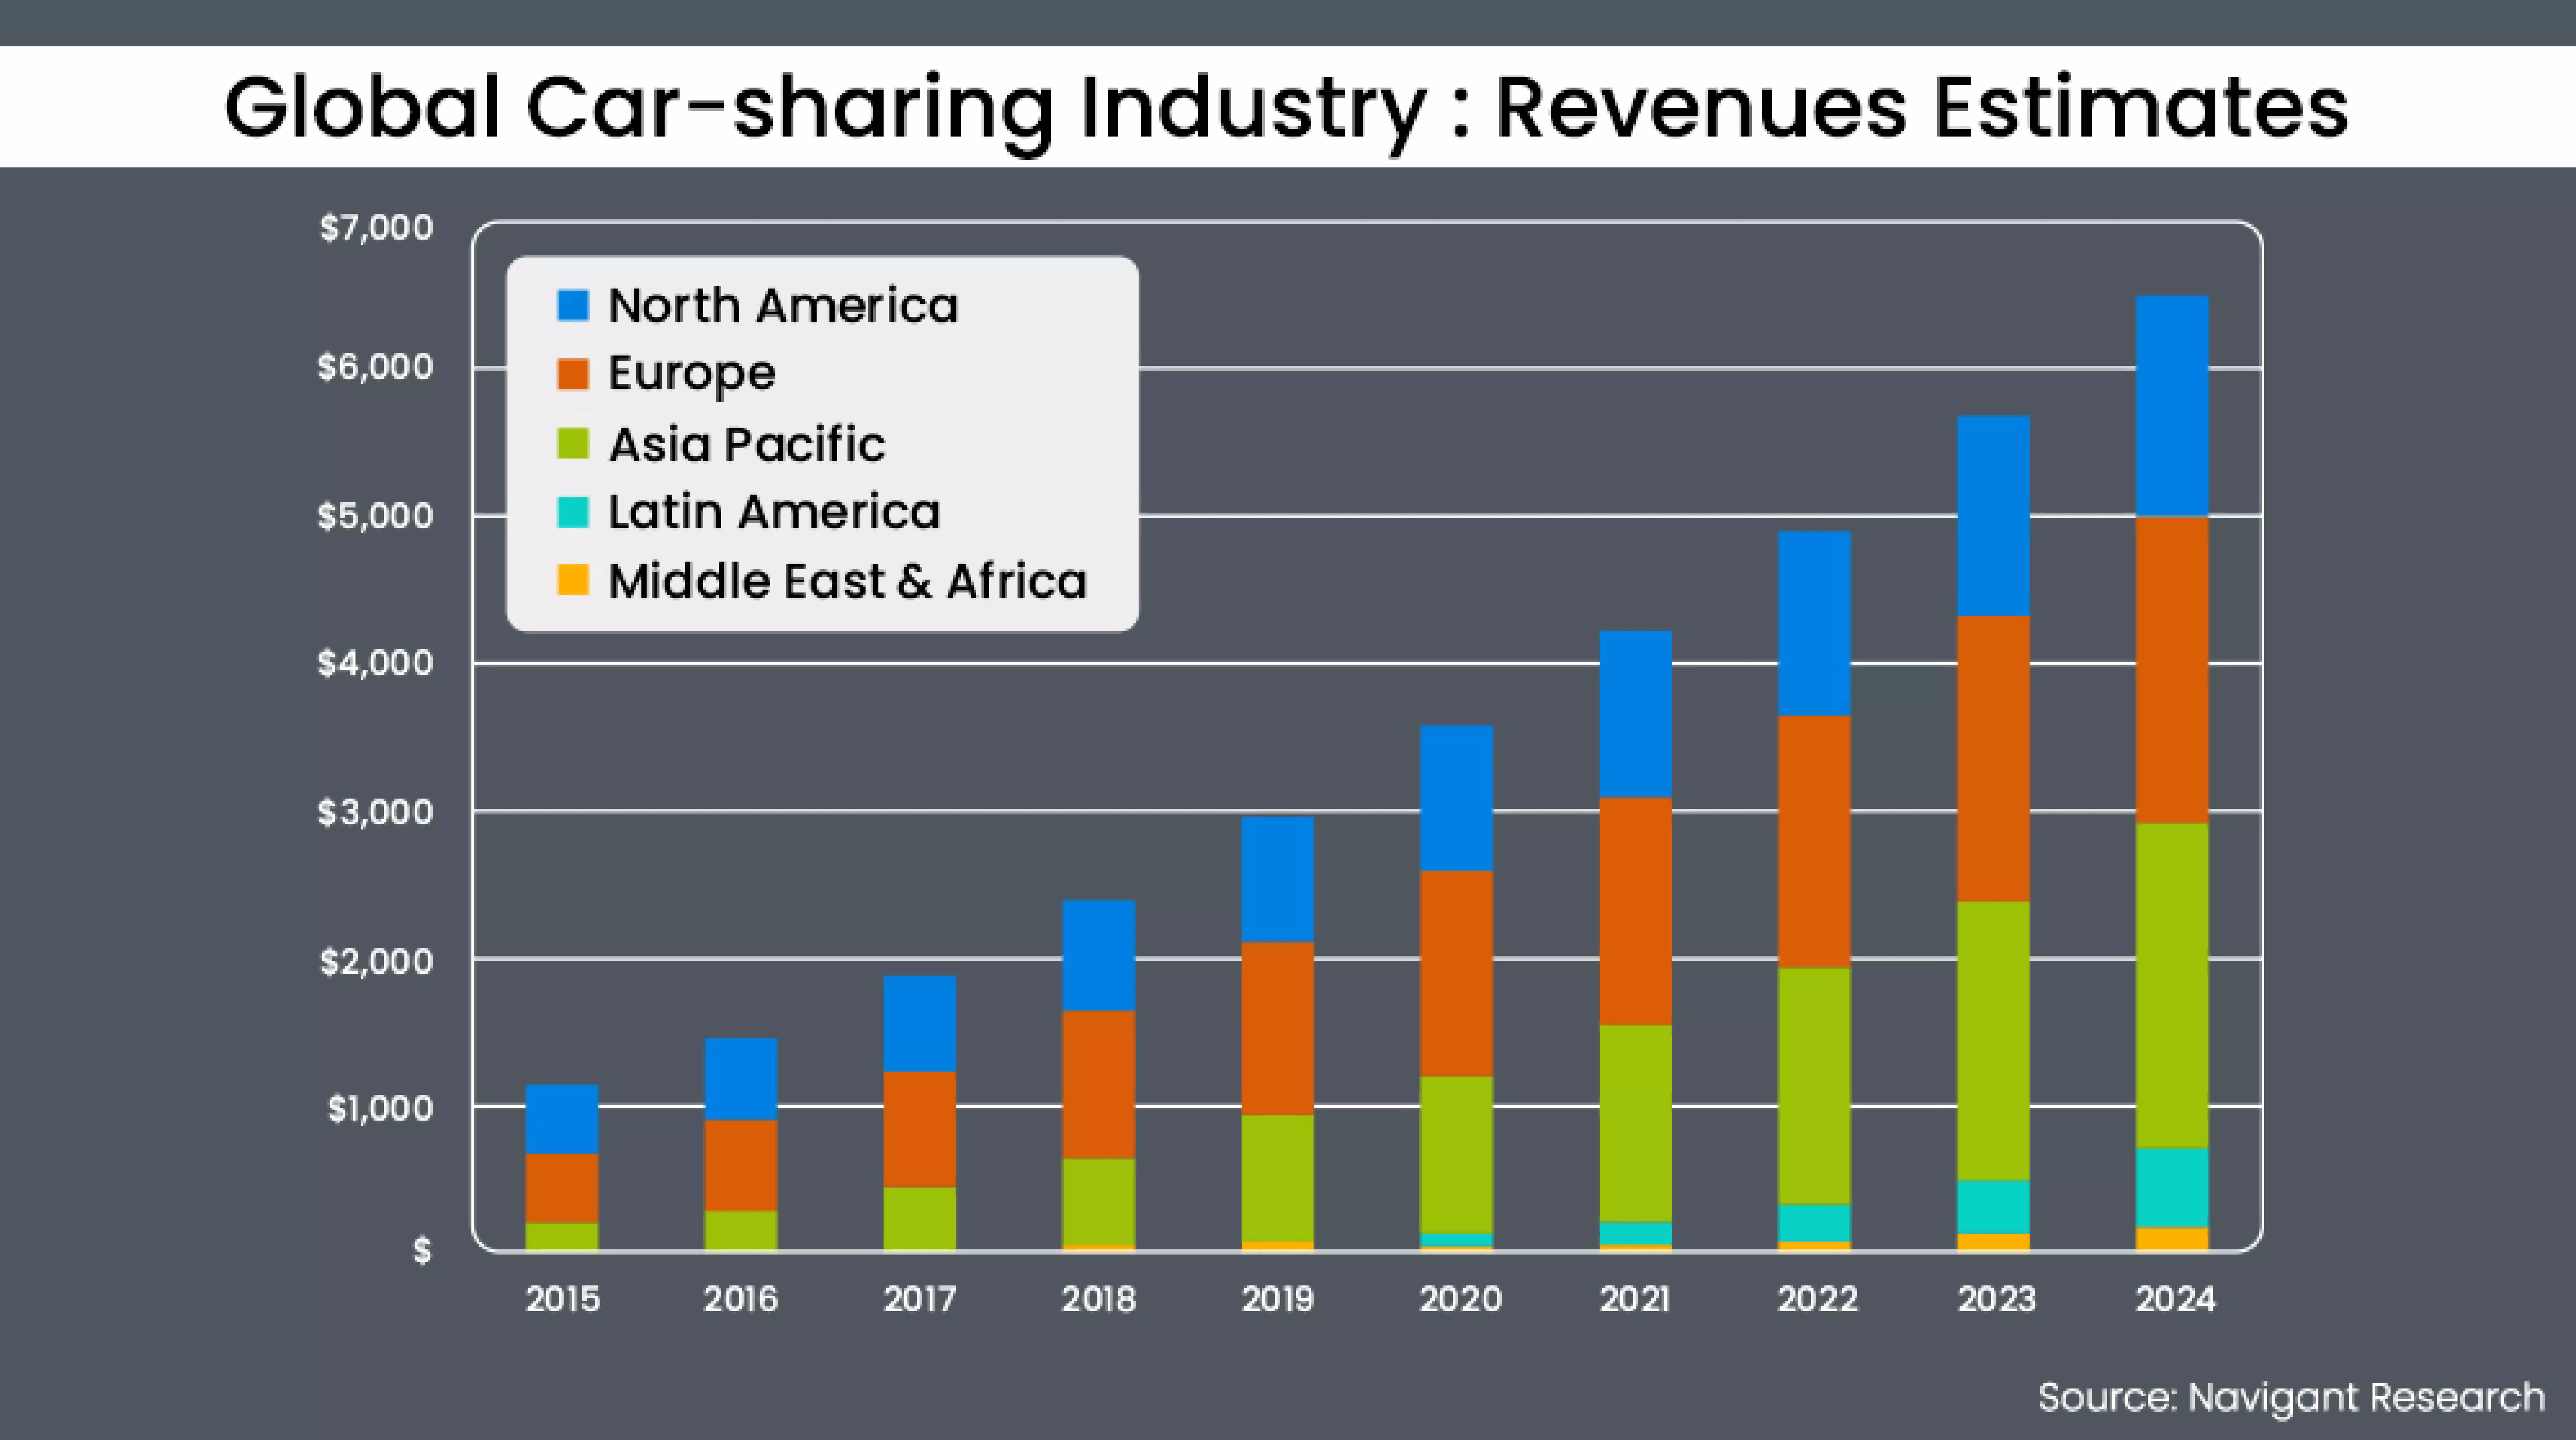 Global Car-sharing Industry Revenues Estimates